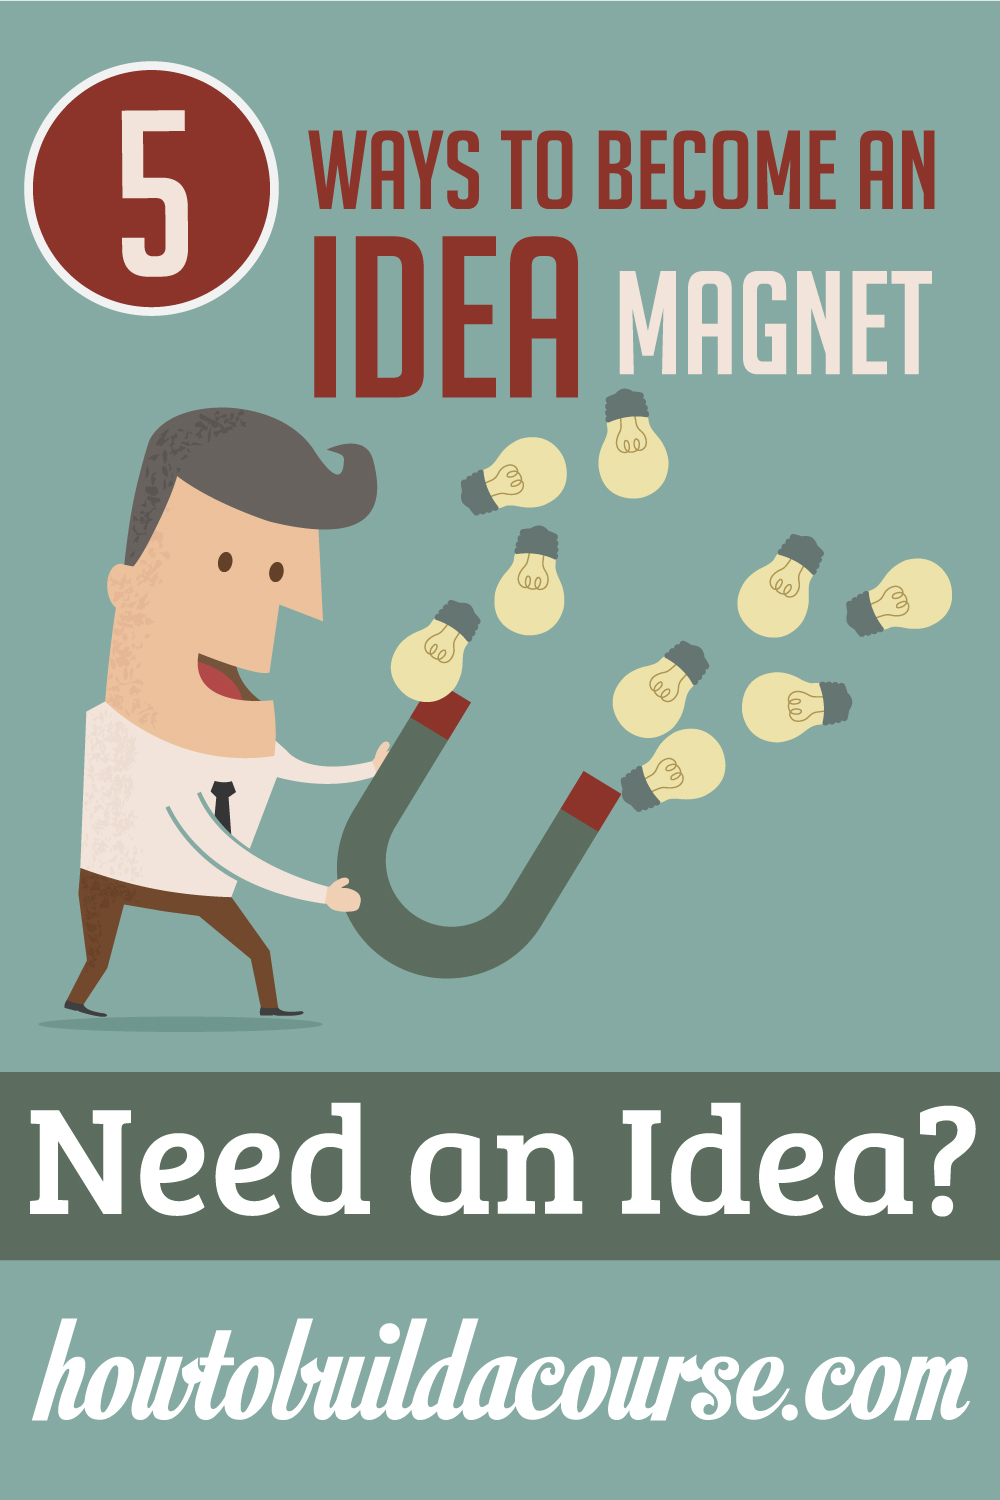 IdeaMagnet